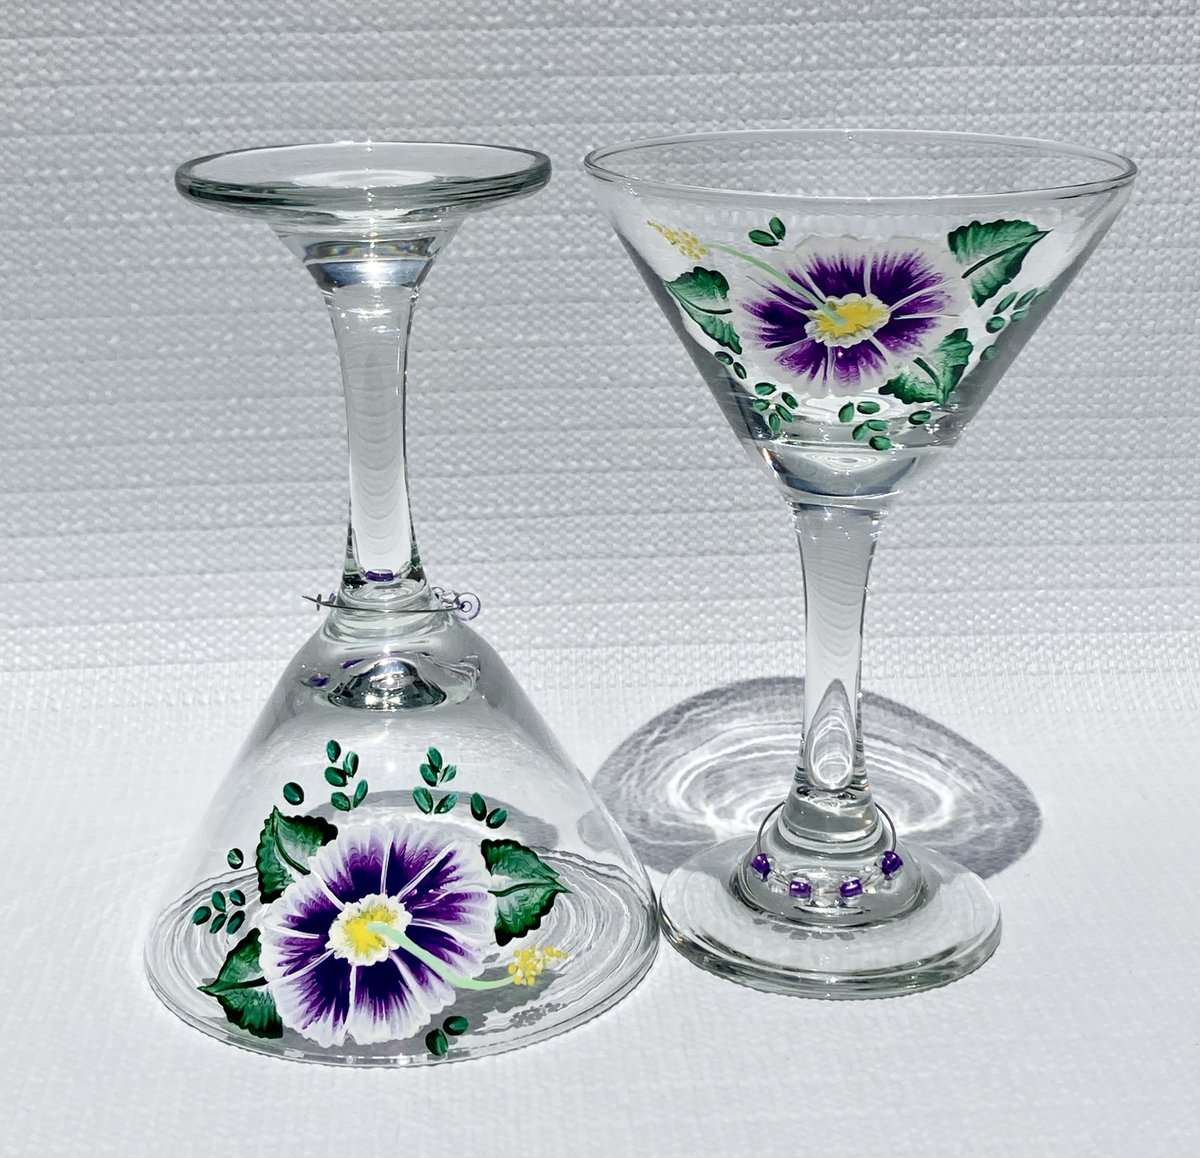 Martini time etsy.com/listing/123984… #martiniglasses #cocktailglasses #paintedglasses #SMILEtt23 #CraftBizParty #giftsforher #etsy #etsyfavorites